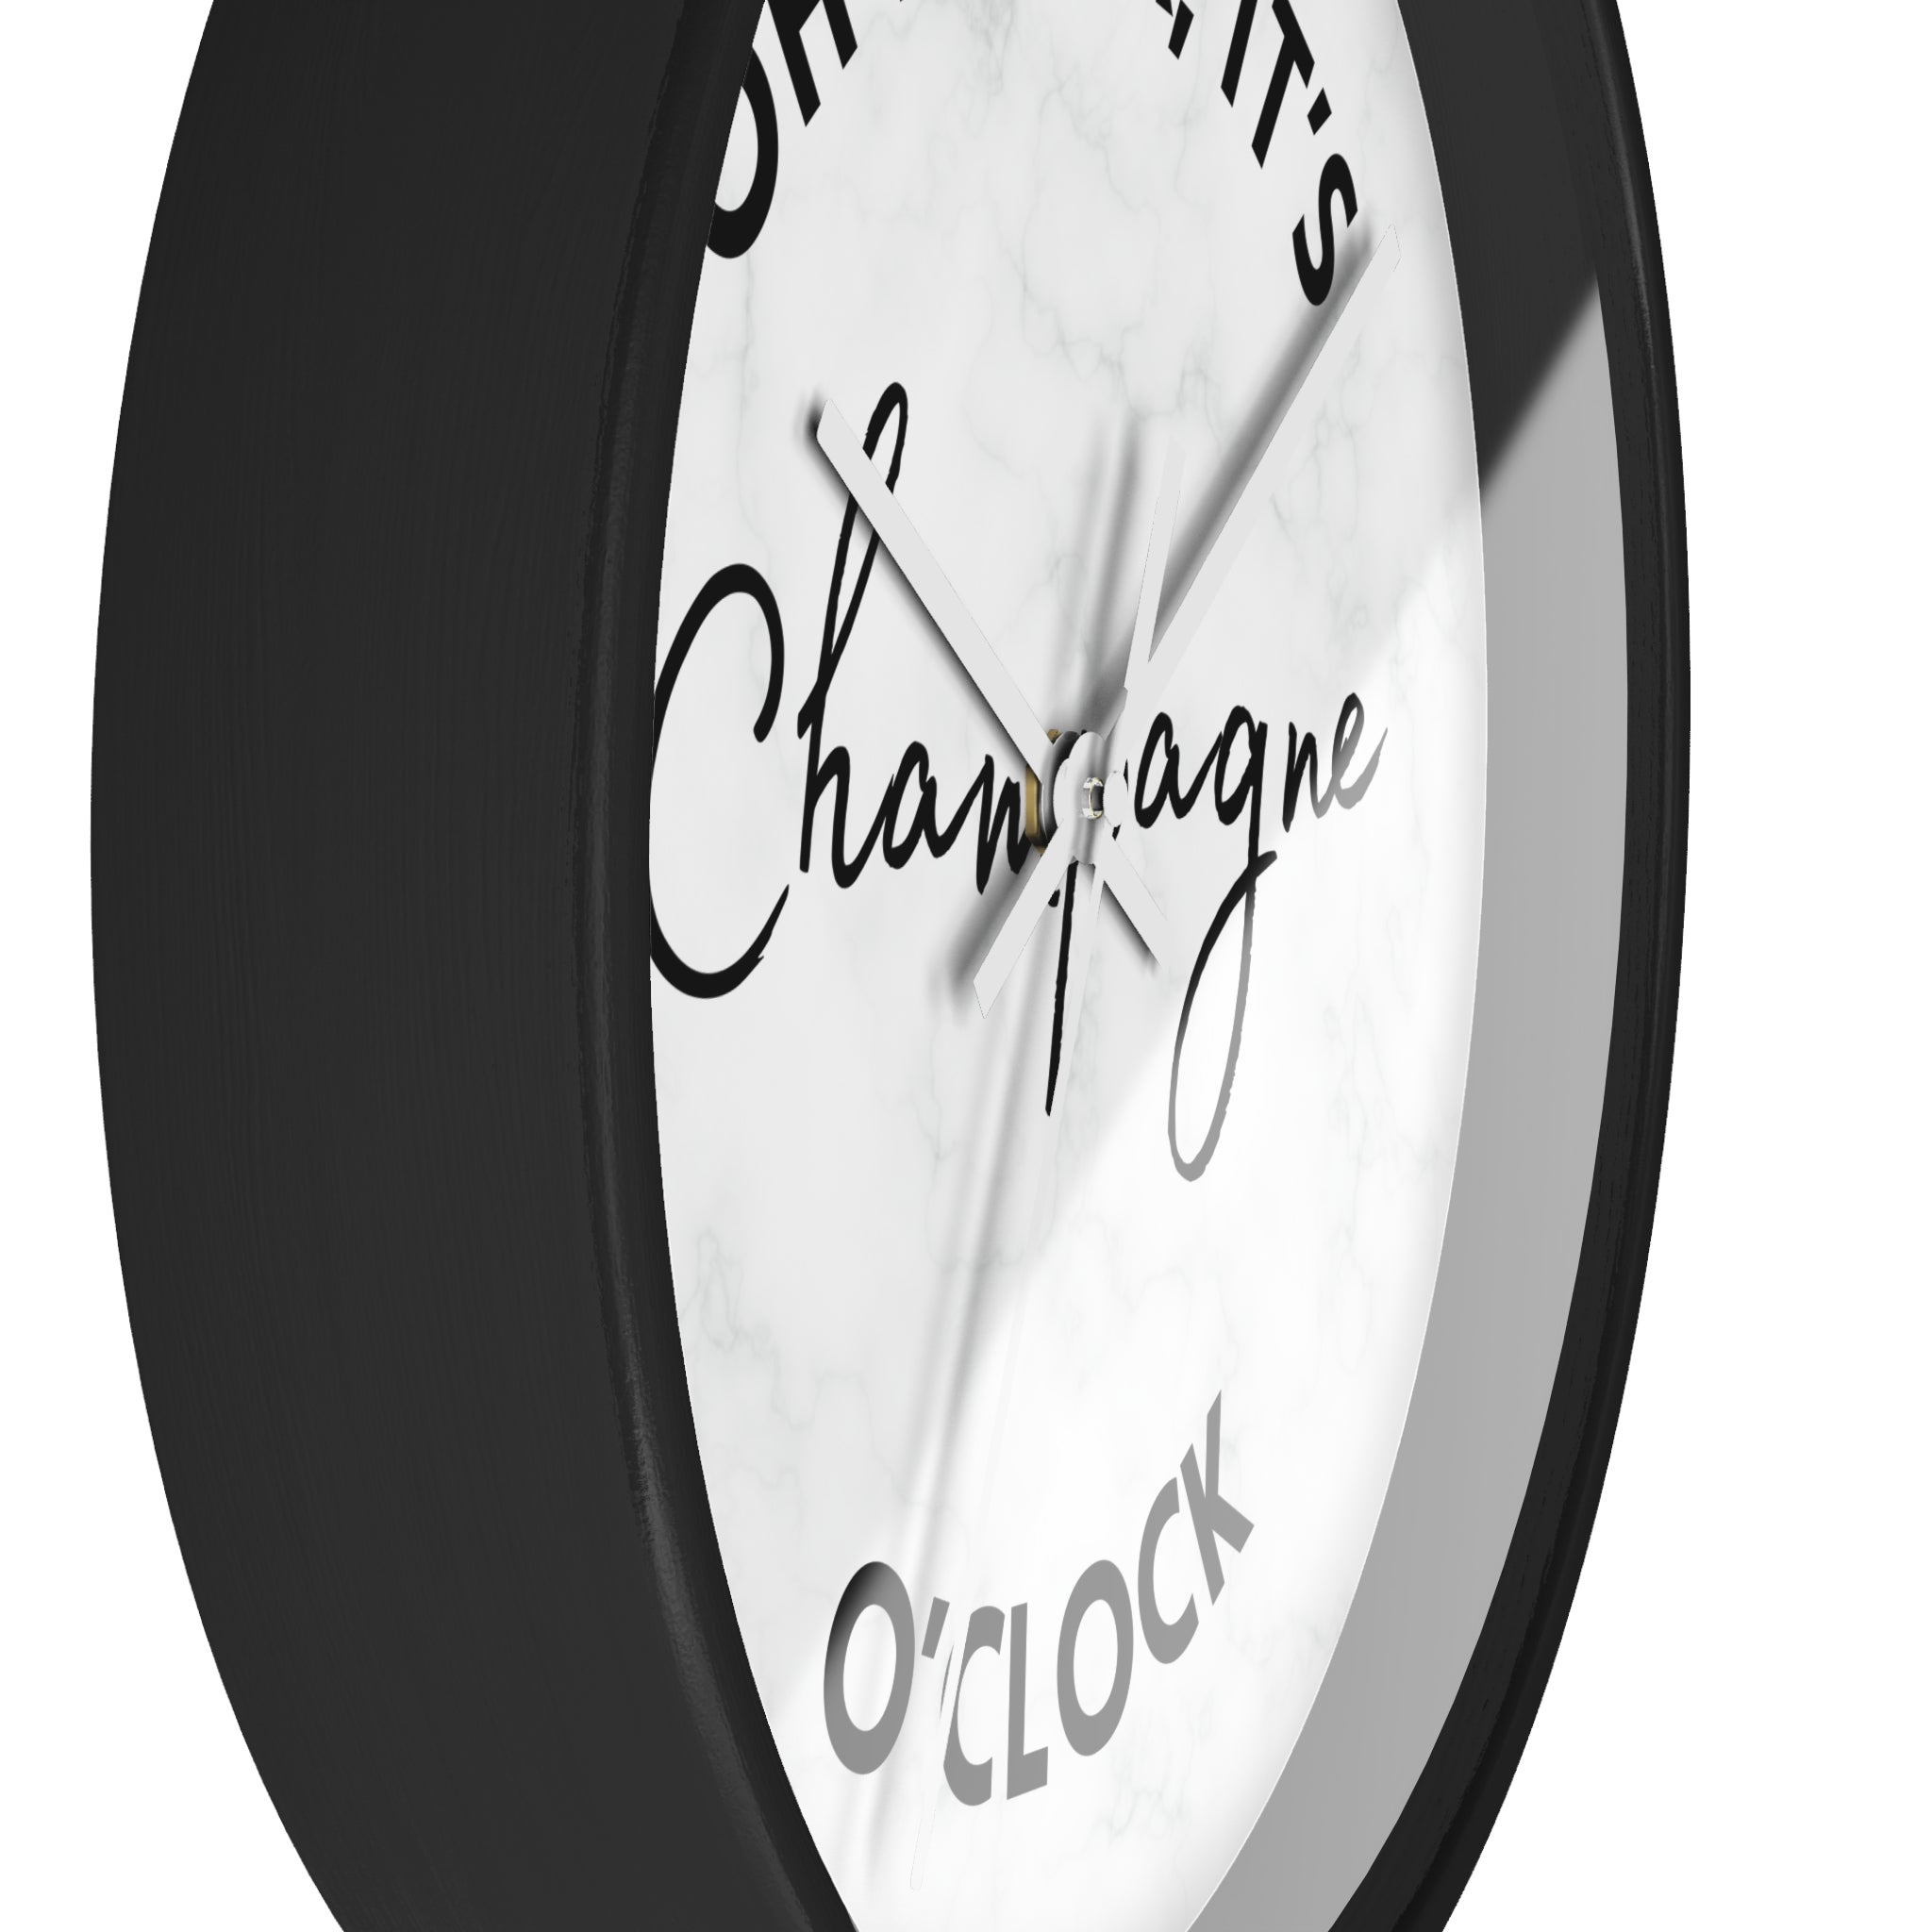 Champagne O'Clock Wall Clock